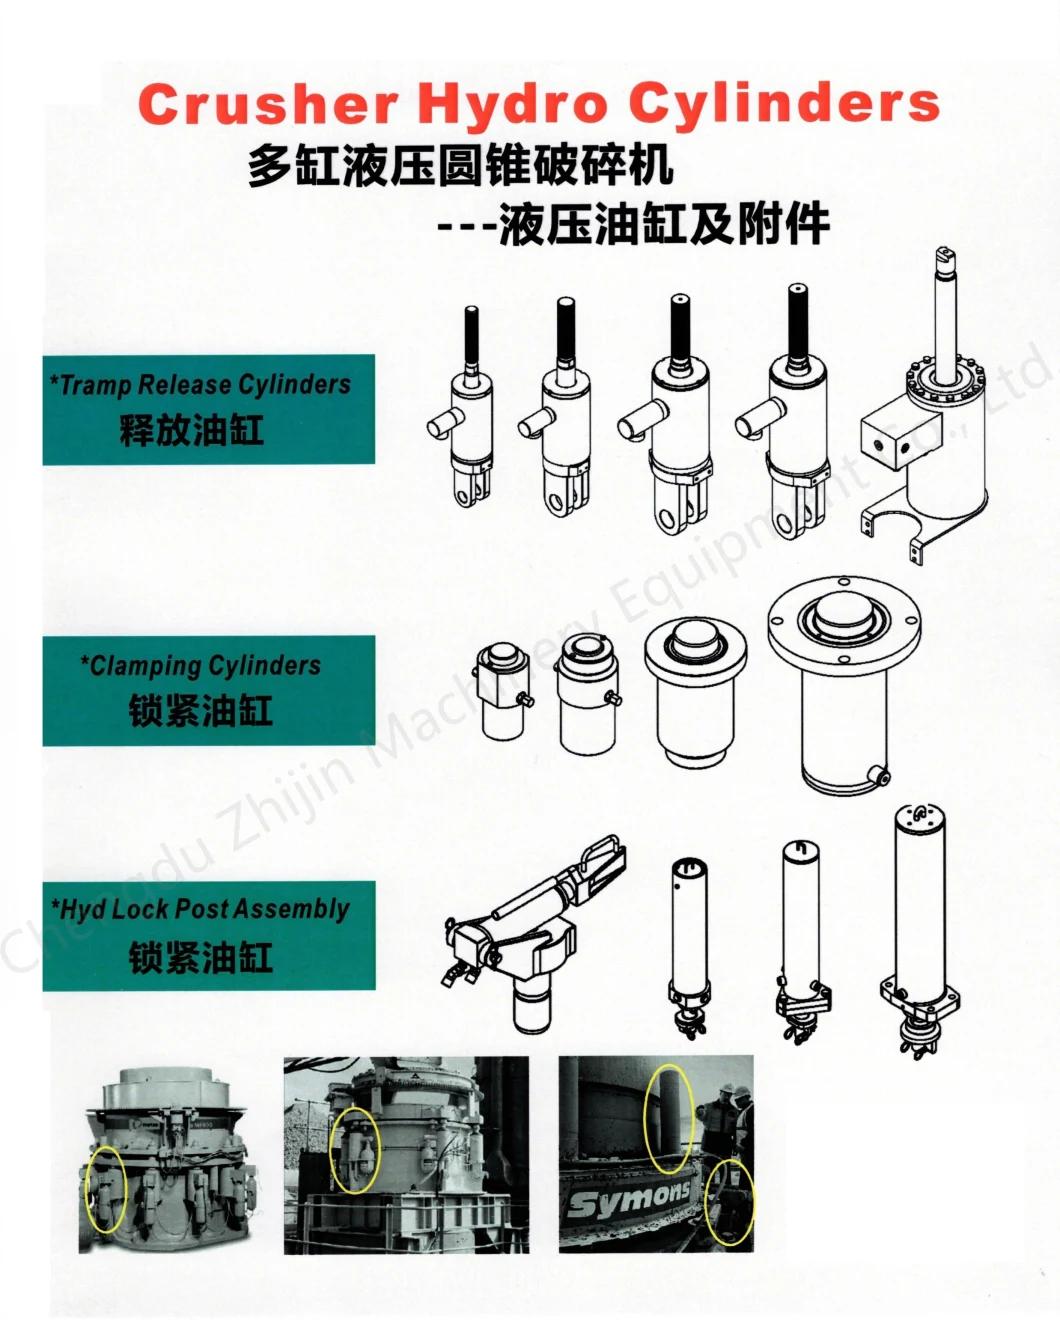 Hydraulic Cylinder Hydraulic RAM for Stone Crusher Mining Crusher Jaw Crusher Cone Crusher Impact Crusher Nordberg HP/MP/Symons Series